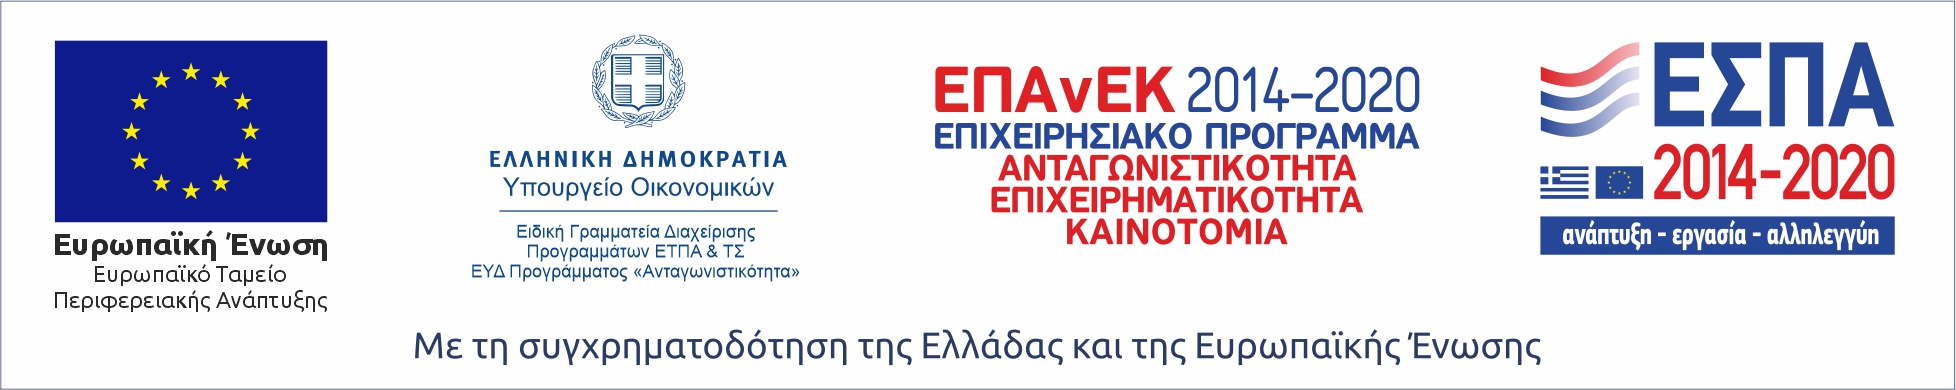 epanek logo greek